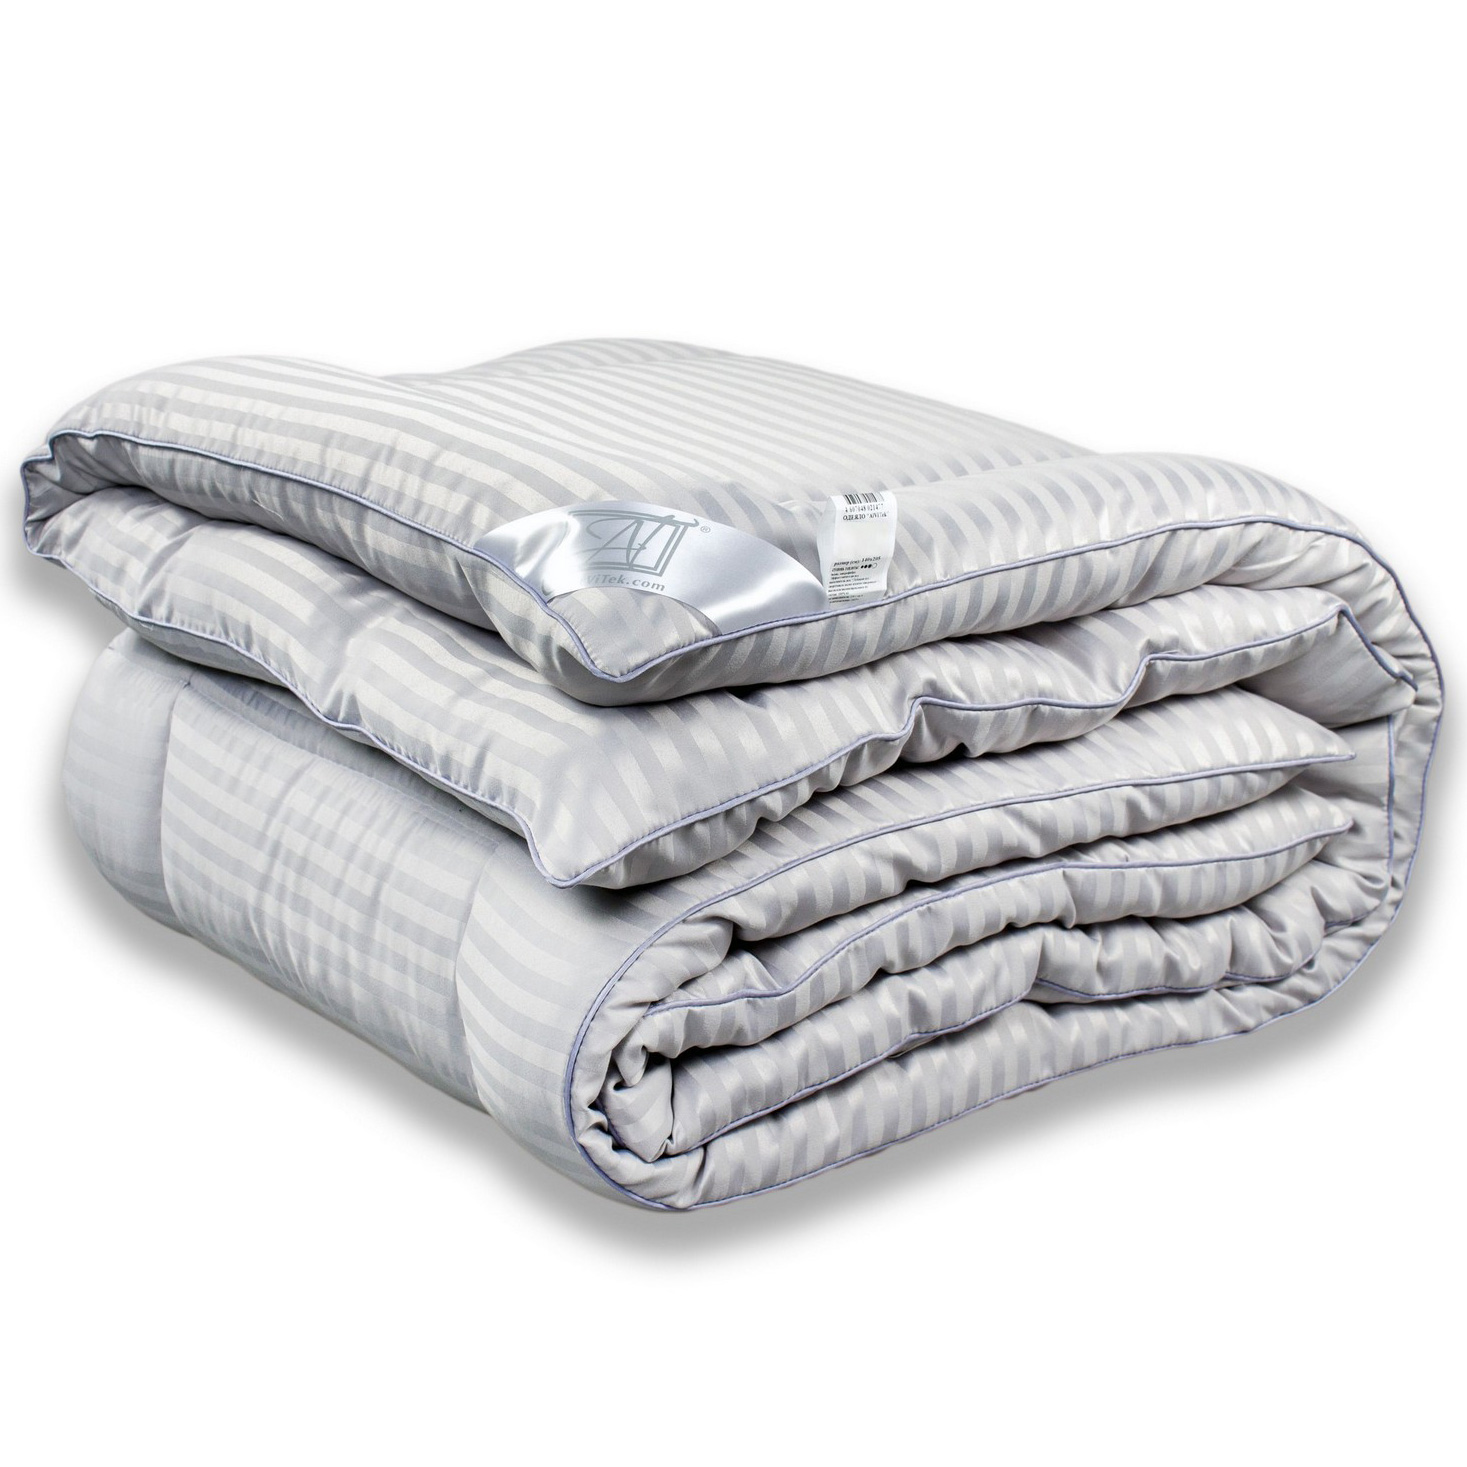 Одеяло Мавис цвет: жемчужно-серый (200х220 см), размер 200х220 см